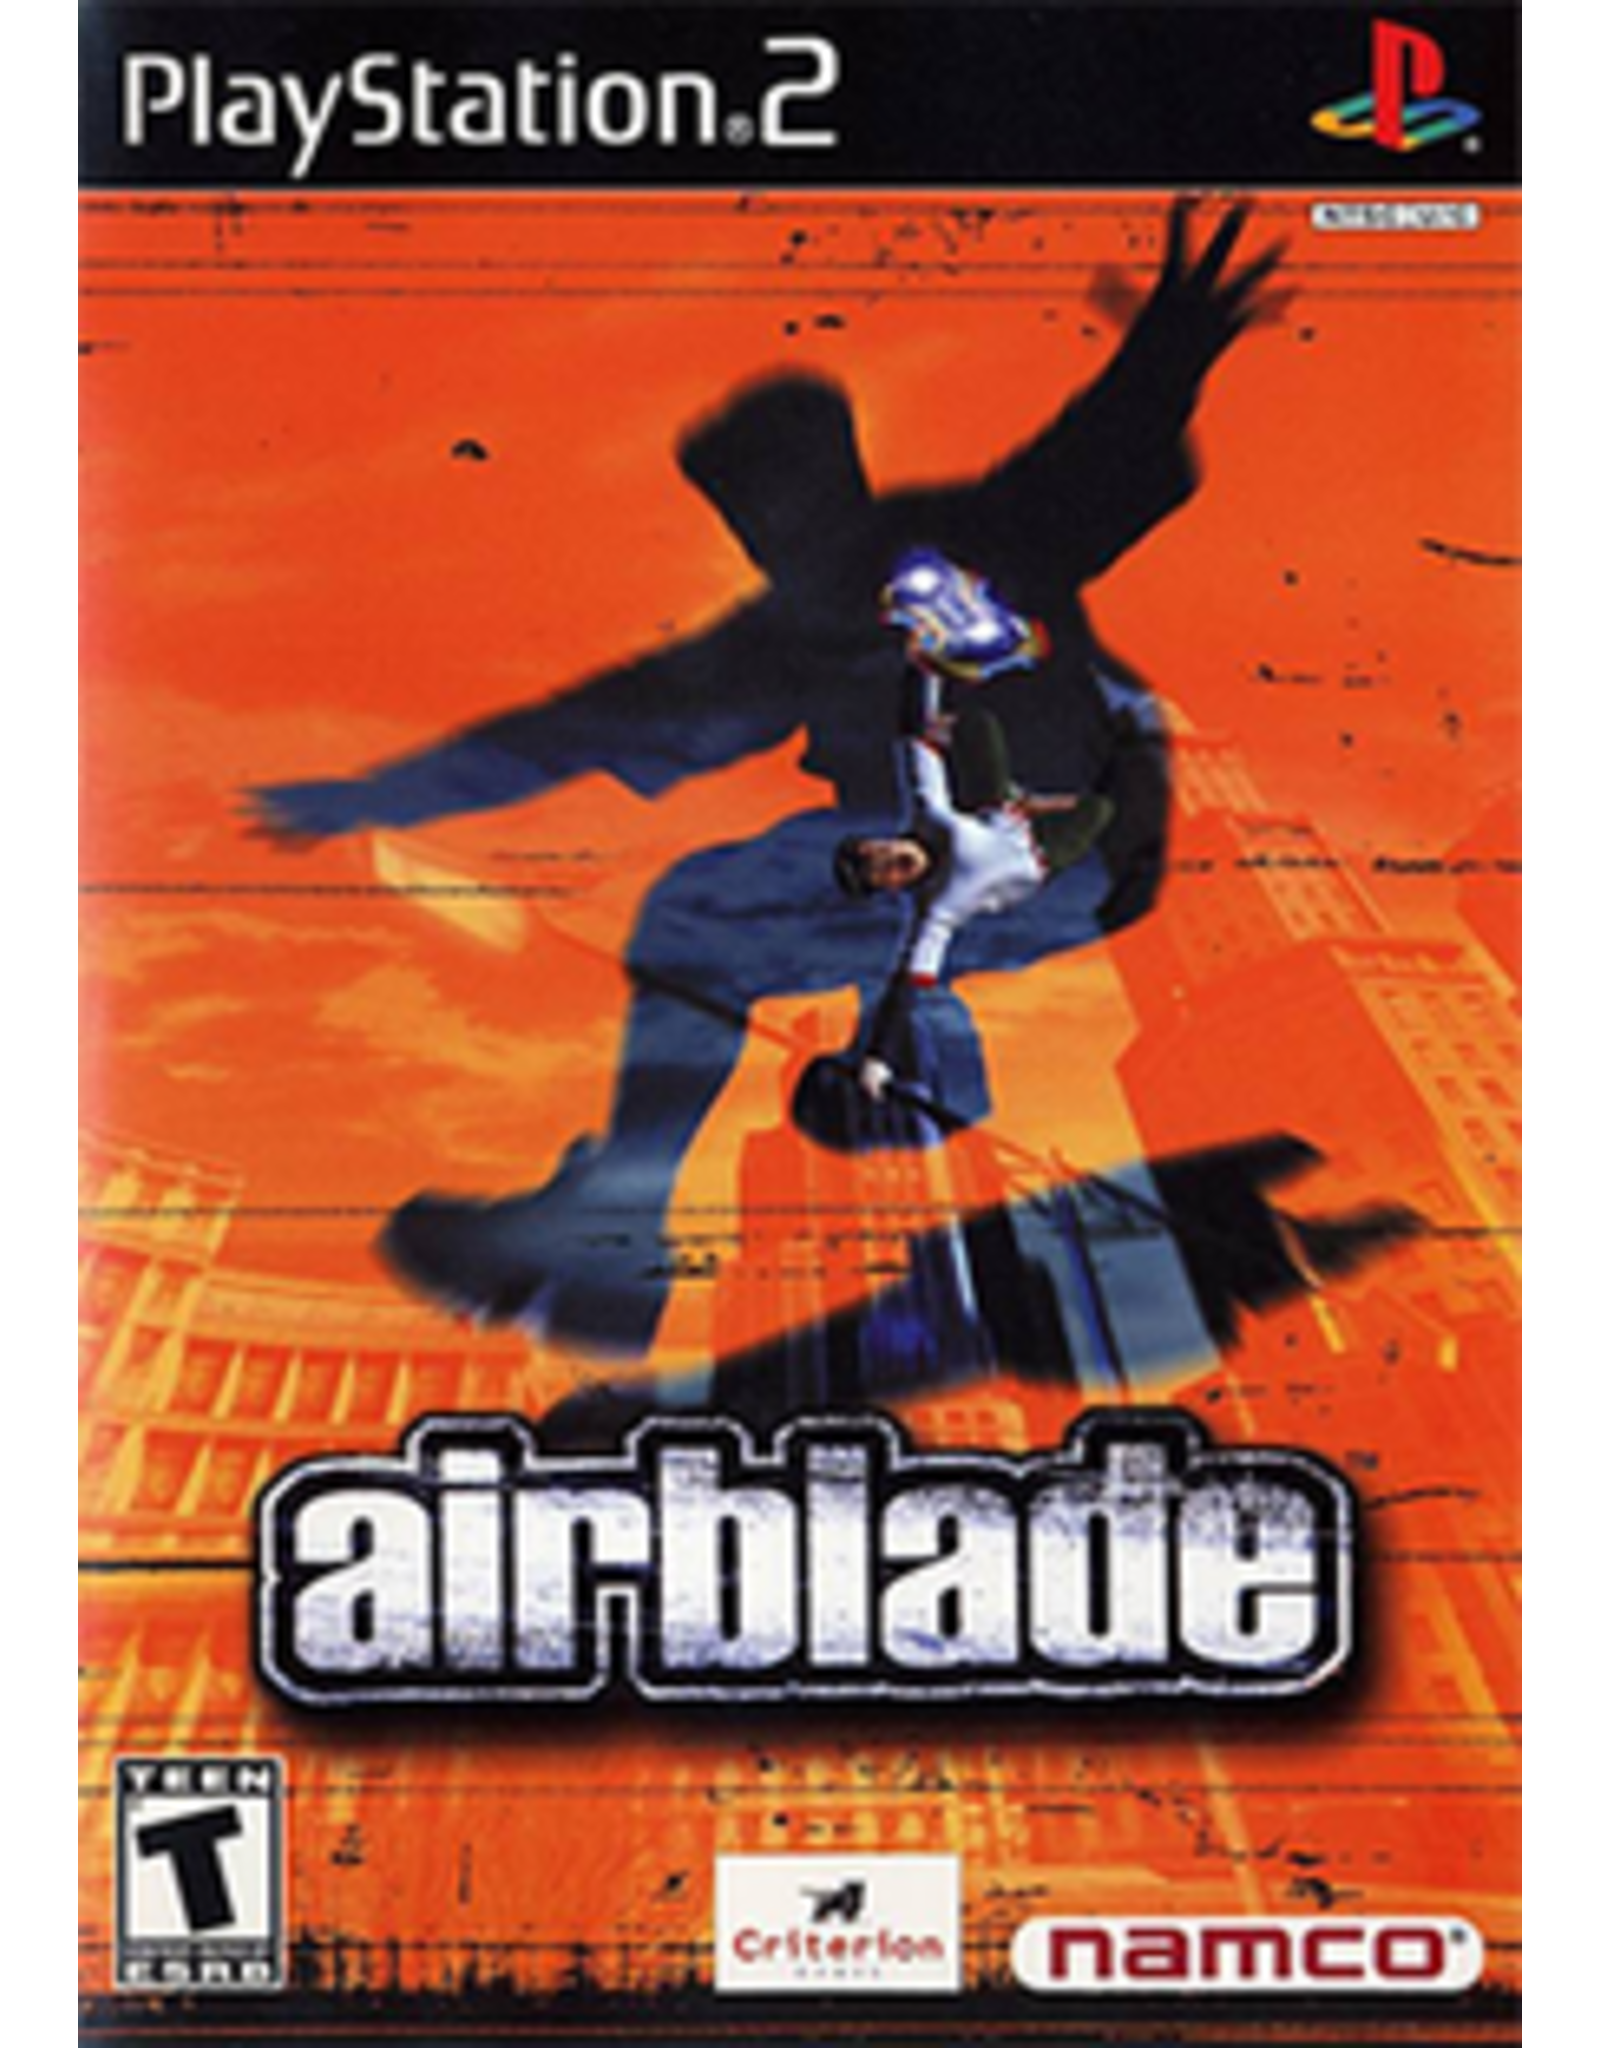 Playstation 2 Airblade (CiB, Writing on Disc)